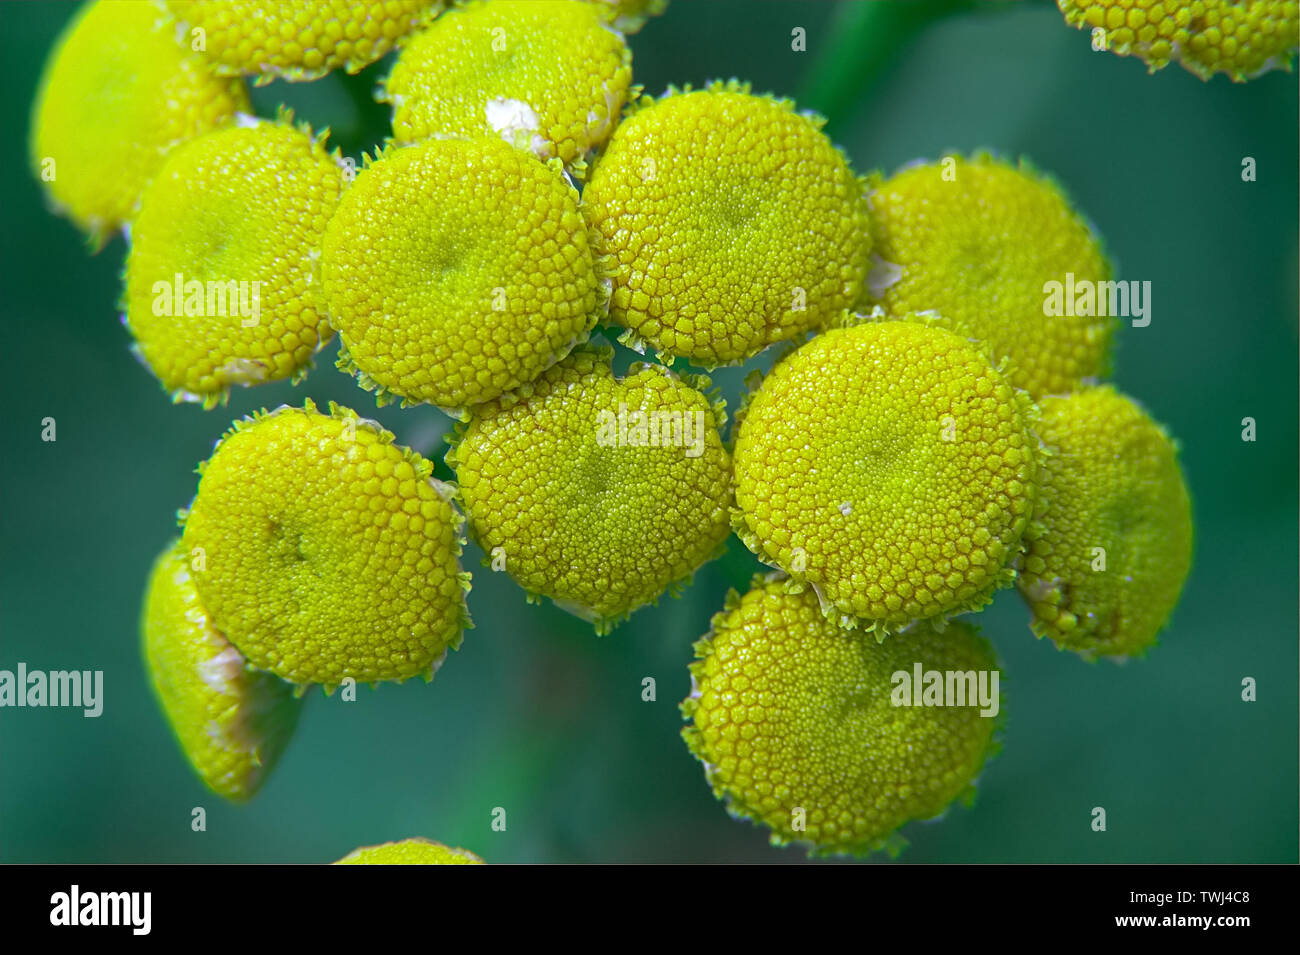 Tanacetum vulgare L. Wrotycz pospolity - kwiatostan; Tansy - inflorescence; Rainfarn - Blütenstand. Macro. Zoom. Stock Photo